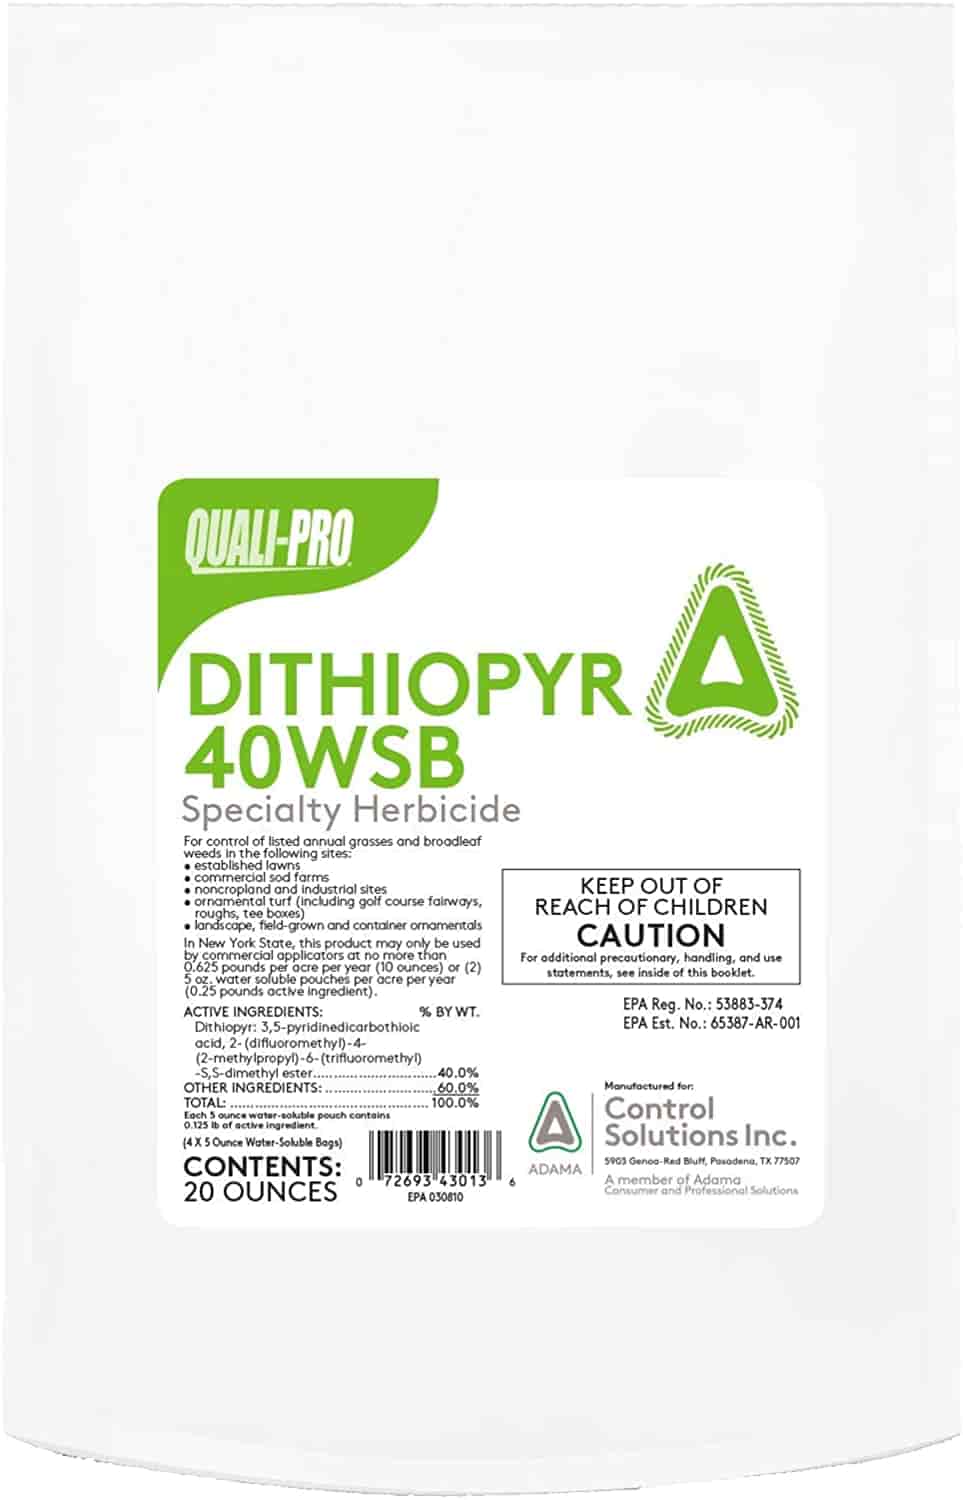 dithiopyr-40wsb-1